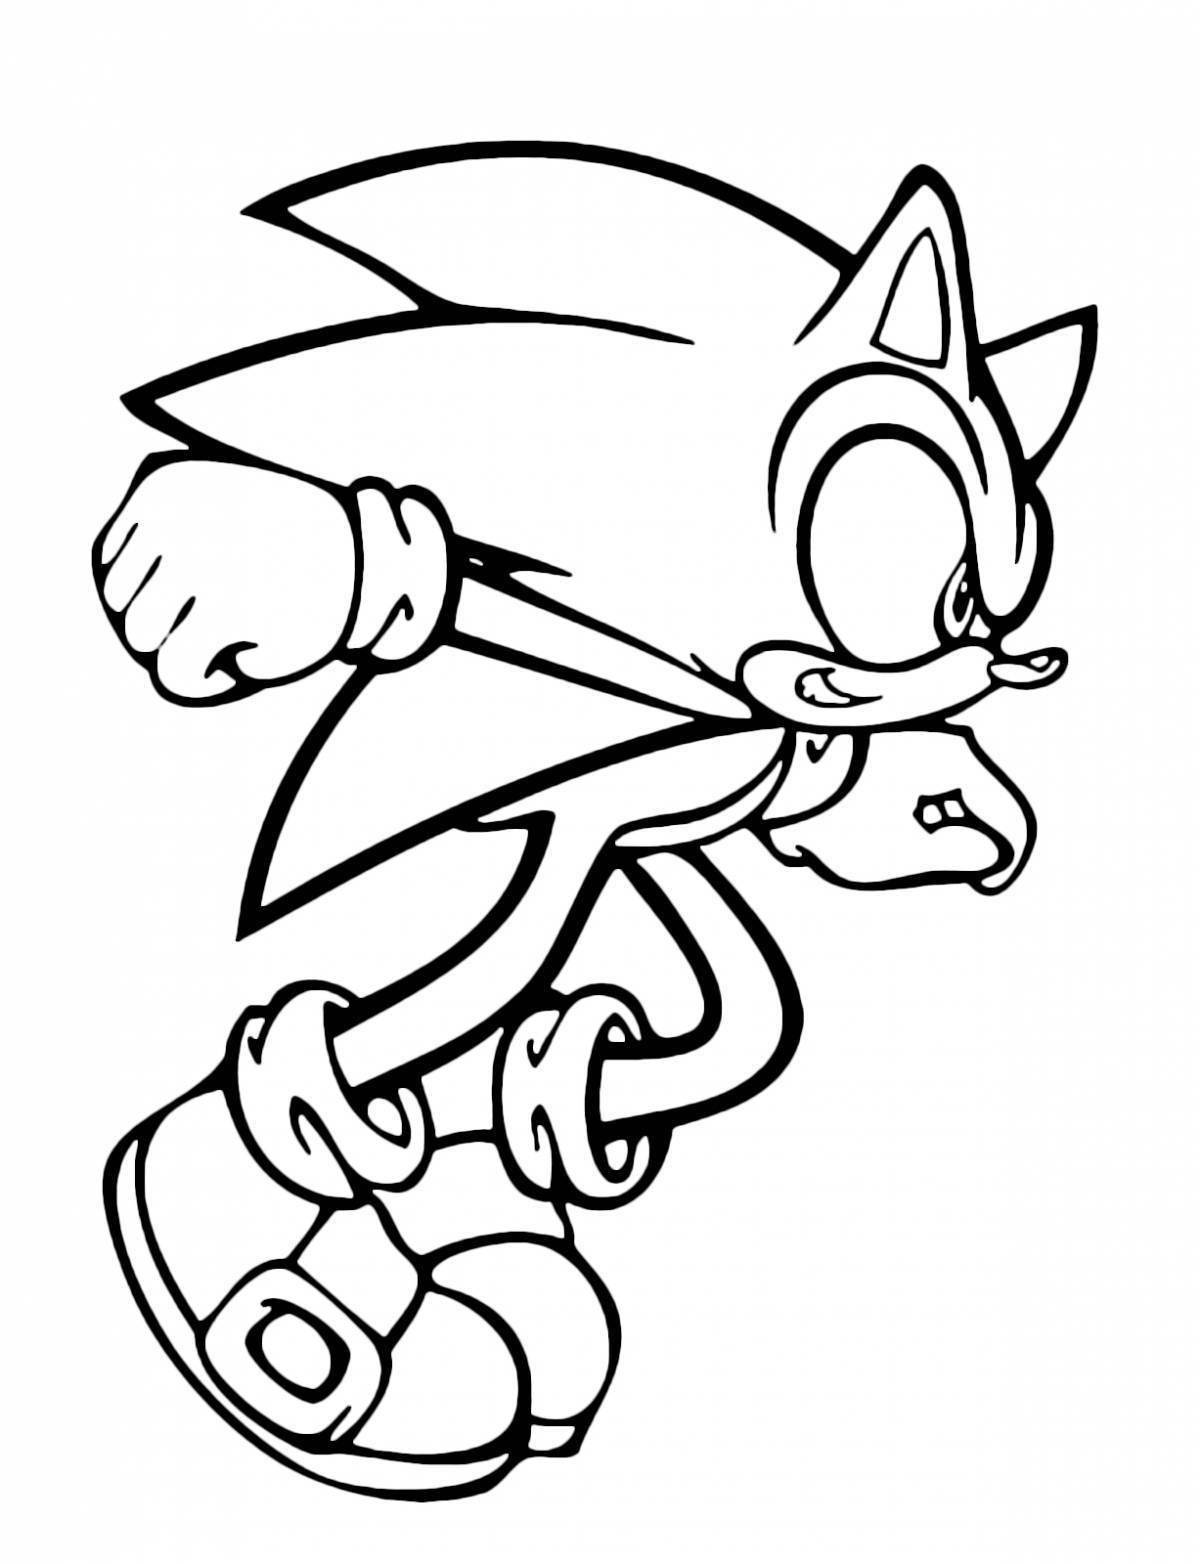 Sonic xz live coloring